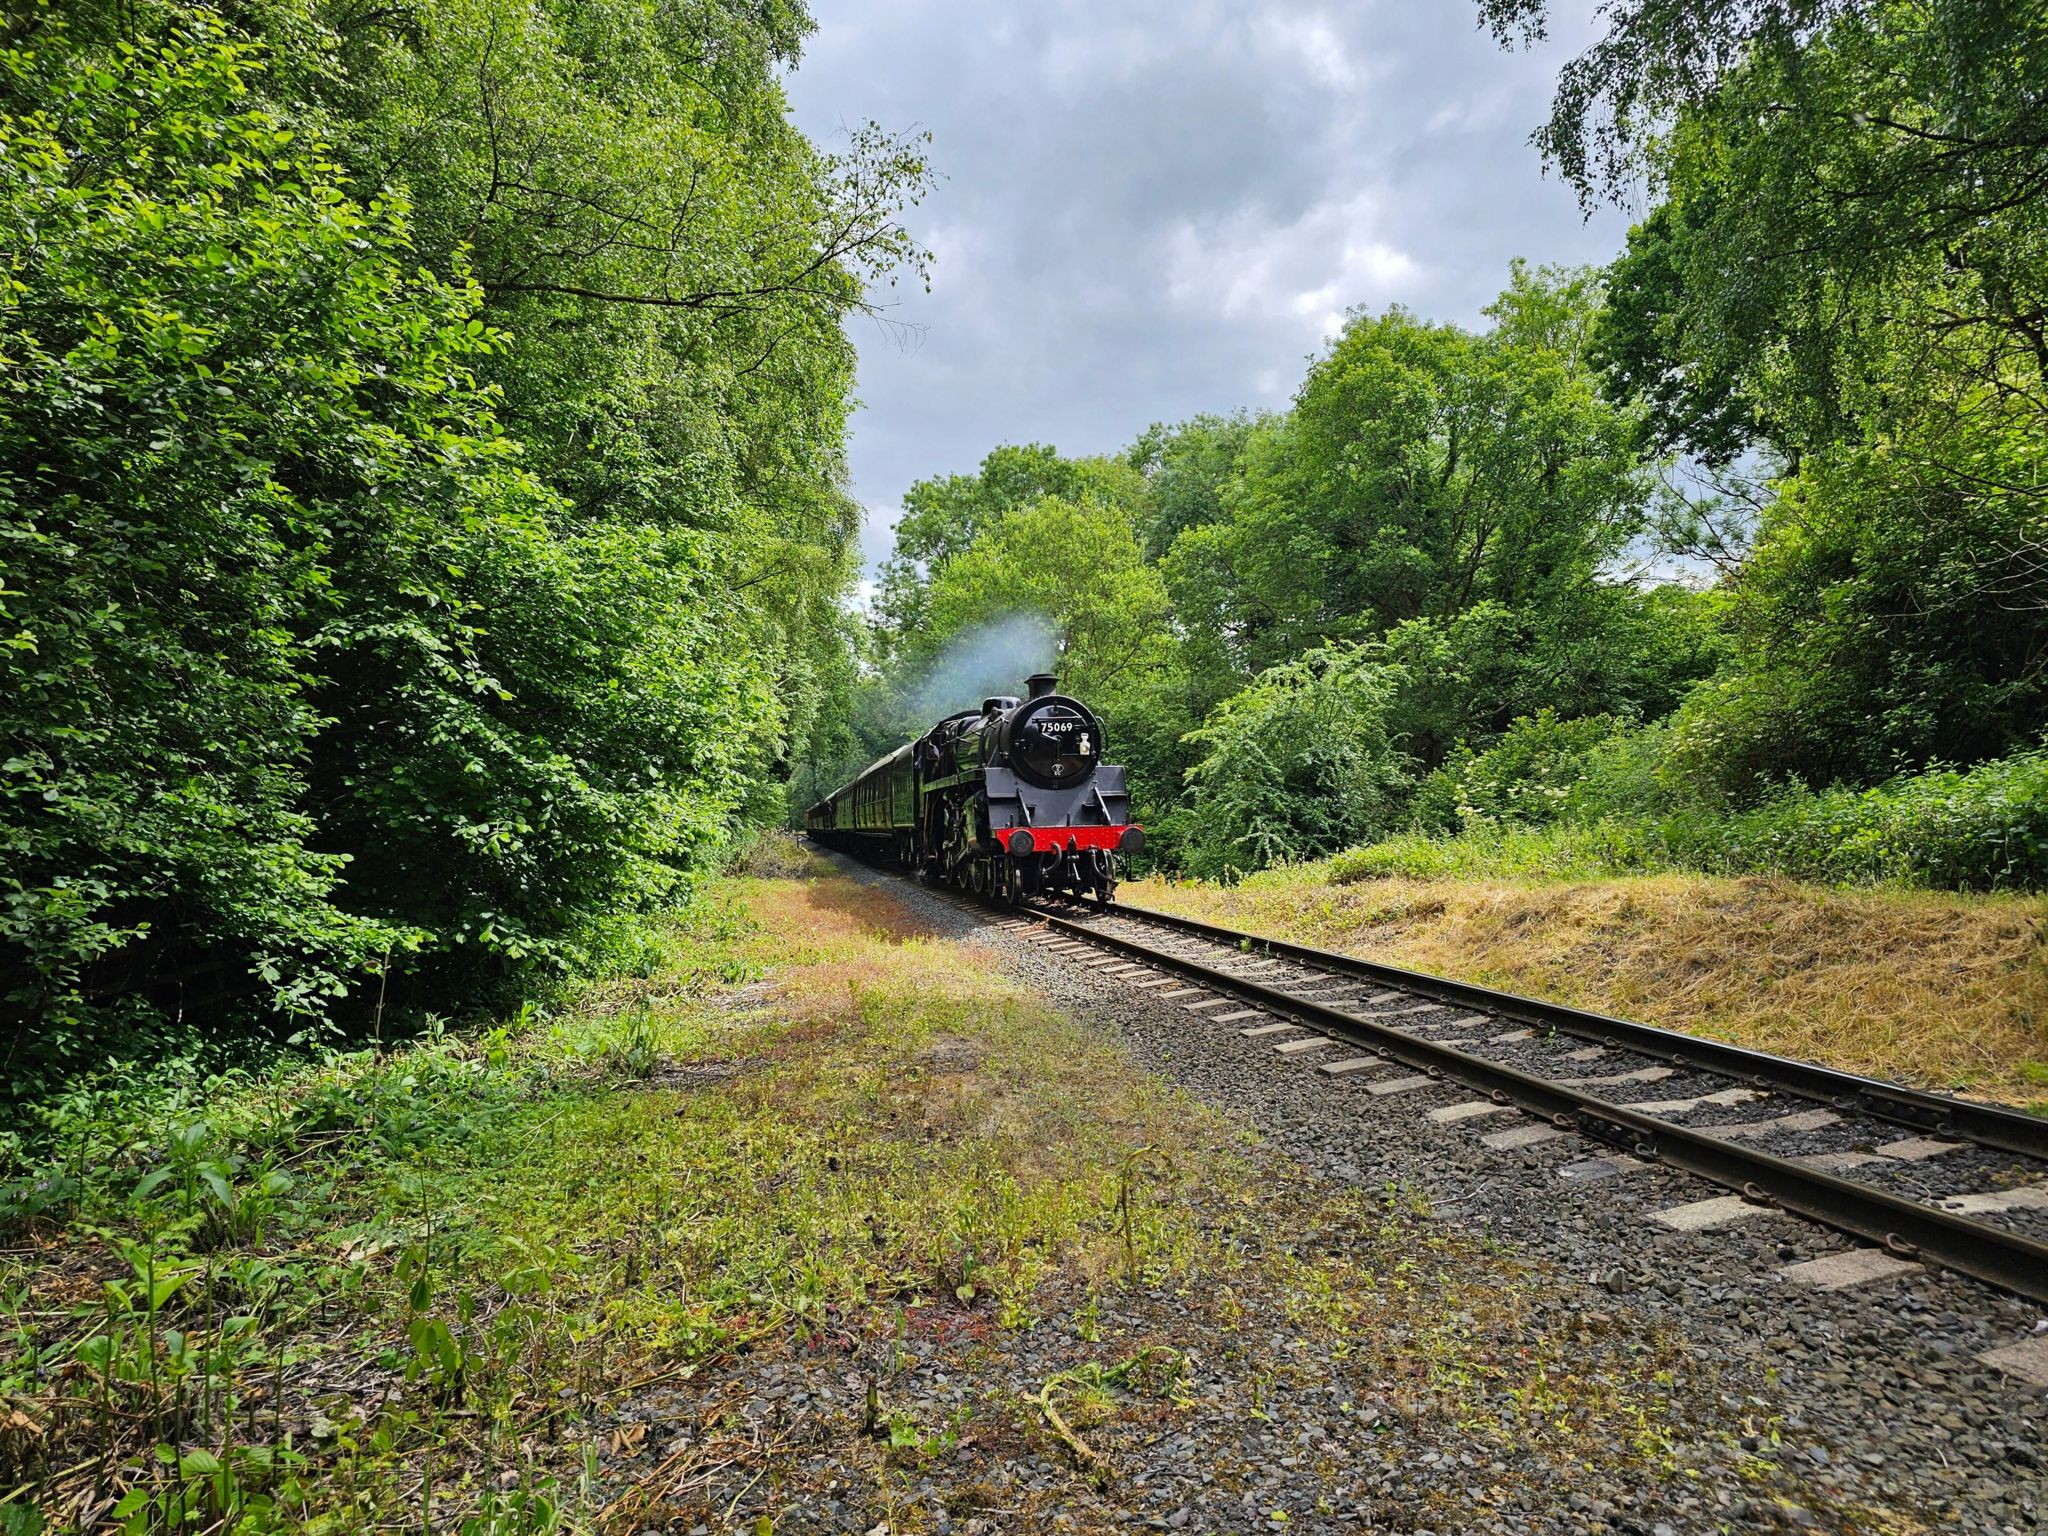 Highley steam train